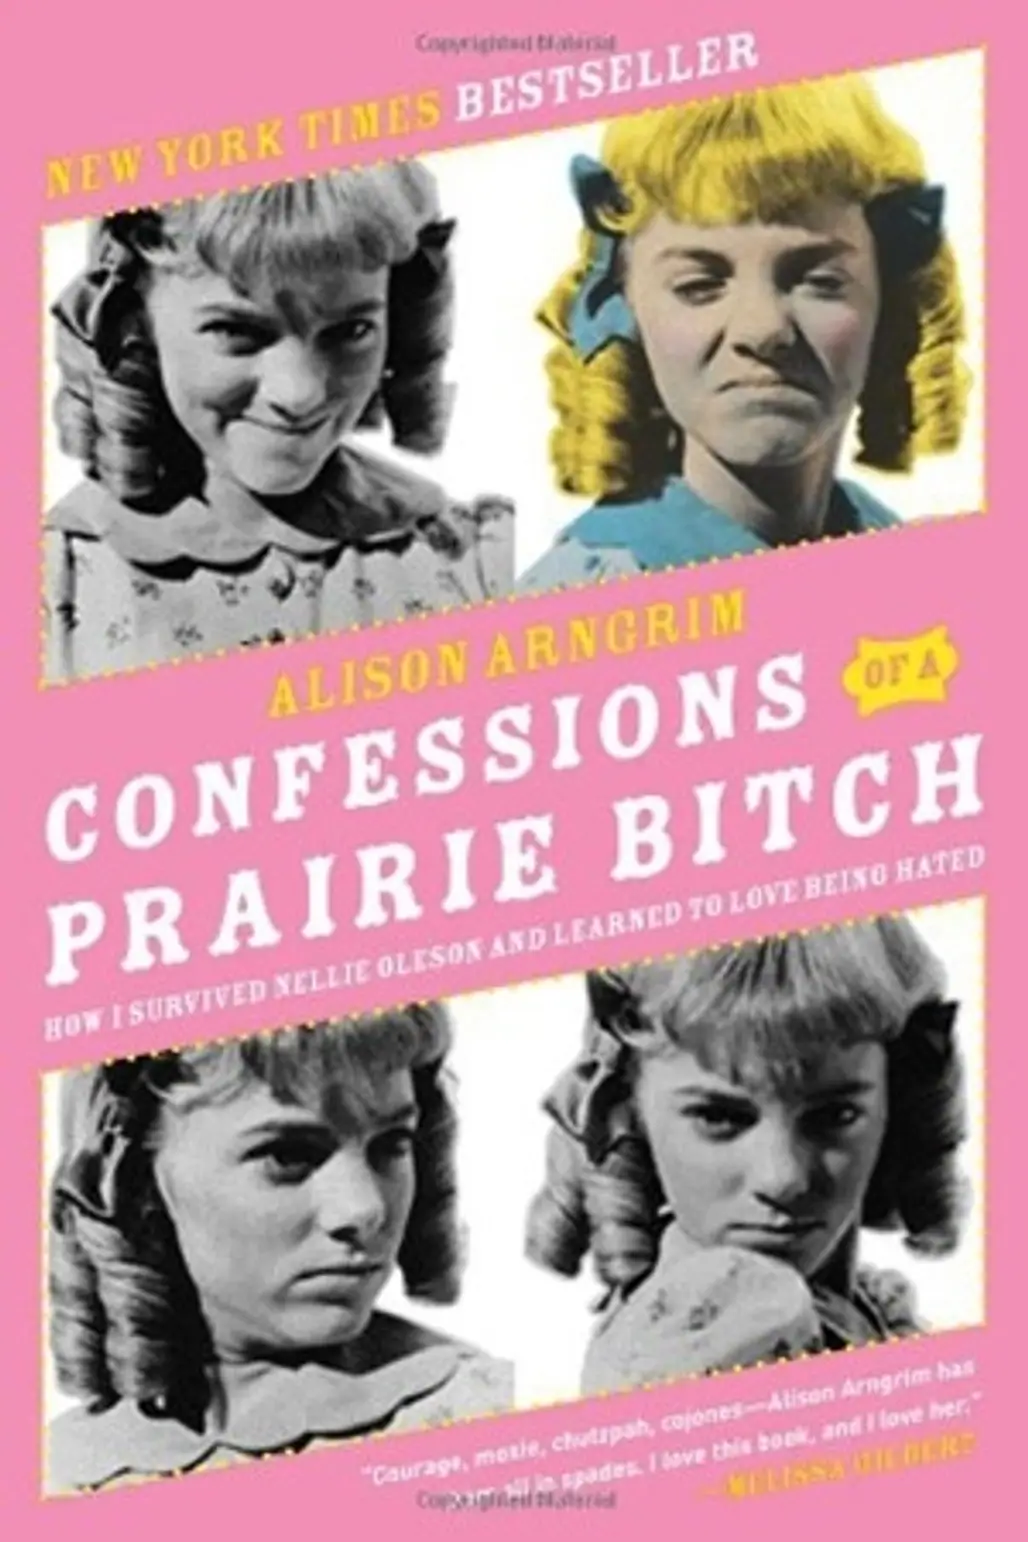 Confessions of a Prairie Bitch, by Alison Arngrim